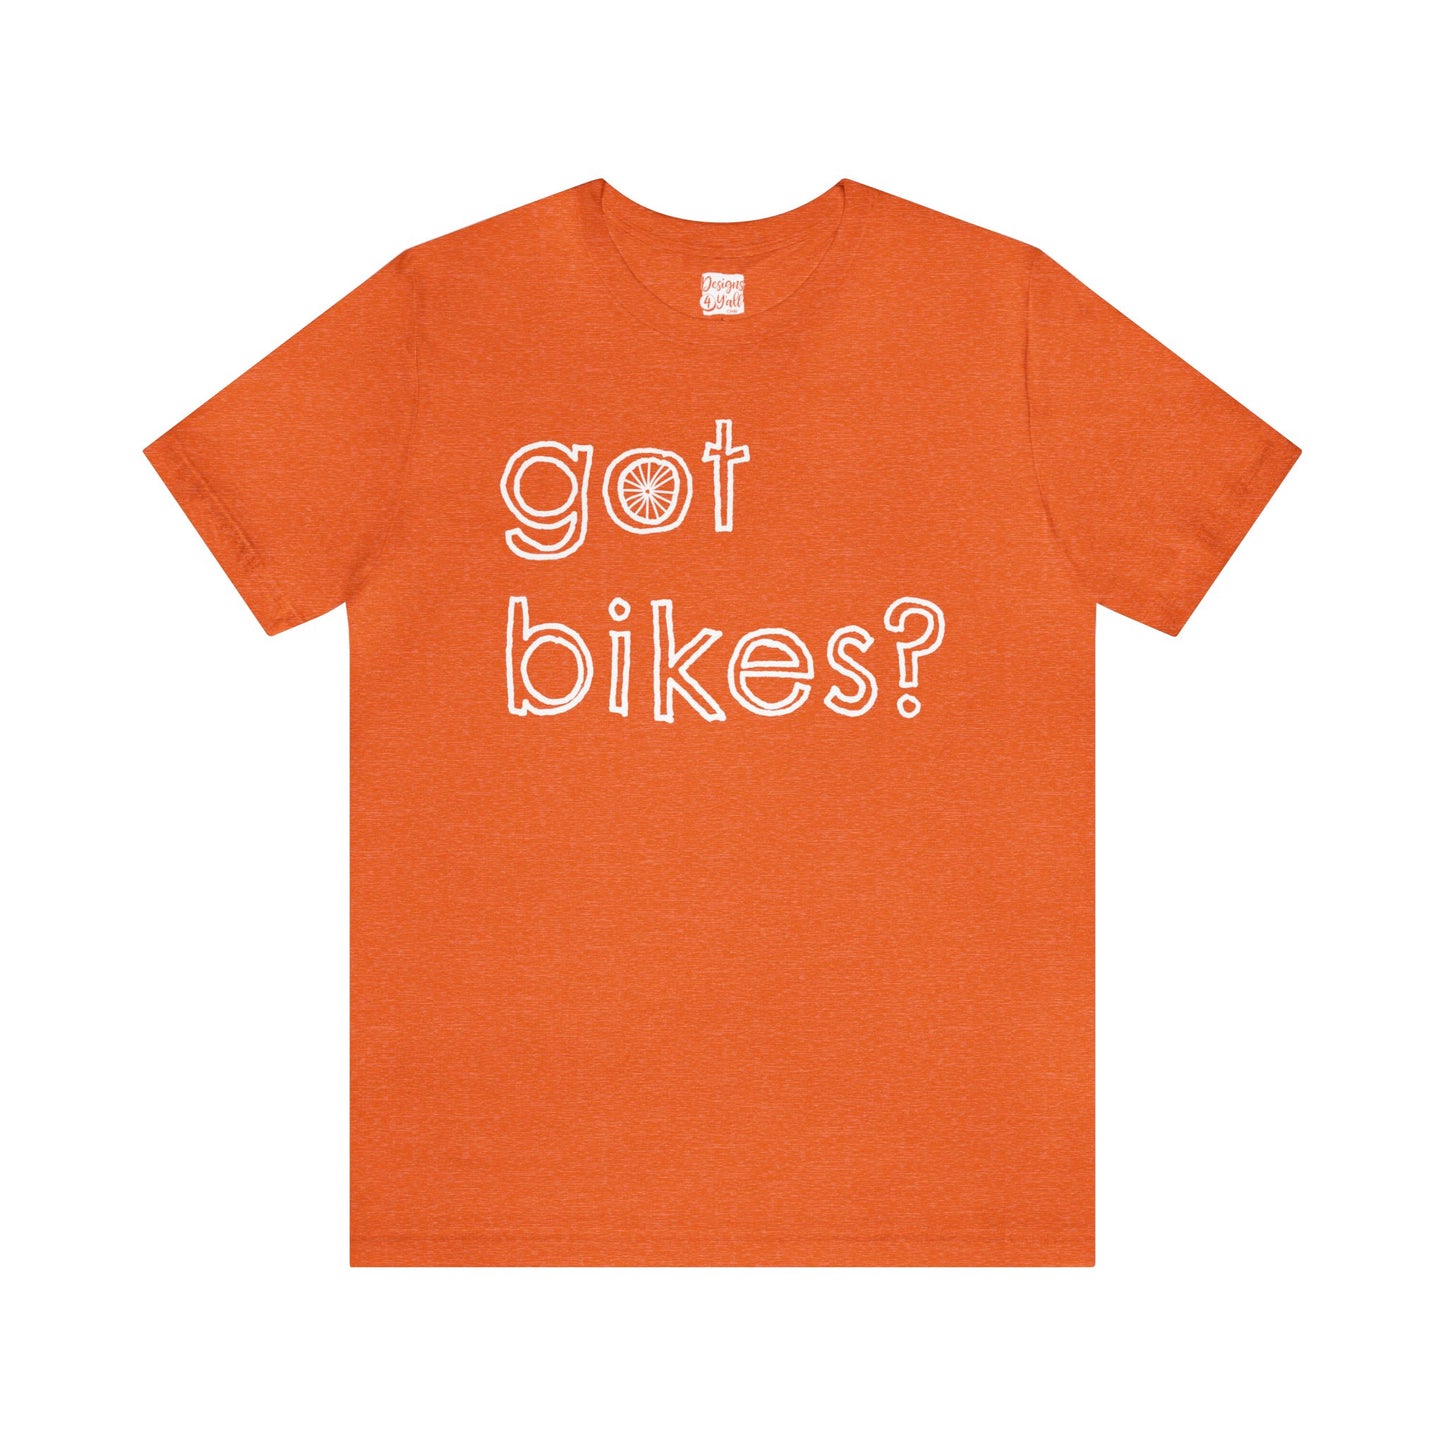 Got Bikes? - Unisex Jersey Short Sleeve Tee